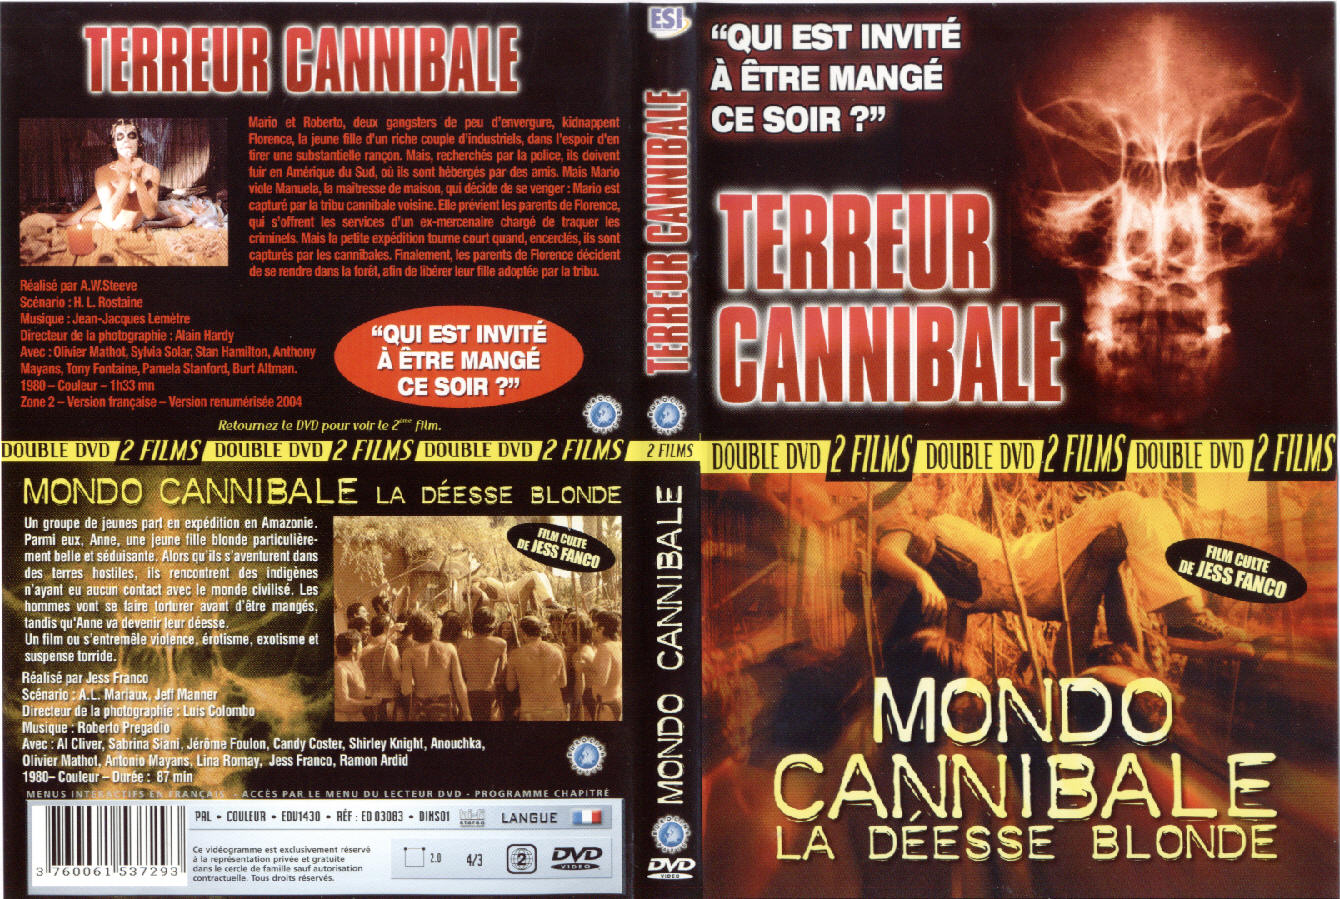 Jaquette DVD Mondo cannibale - terreur cannibale